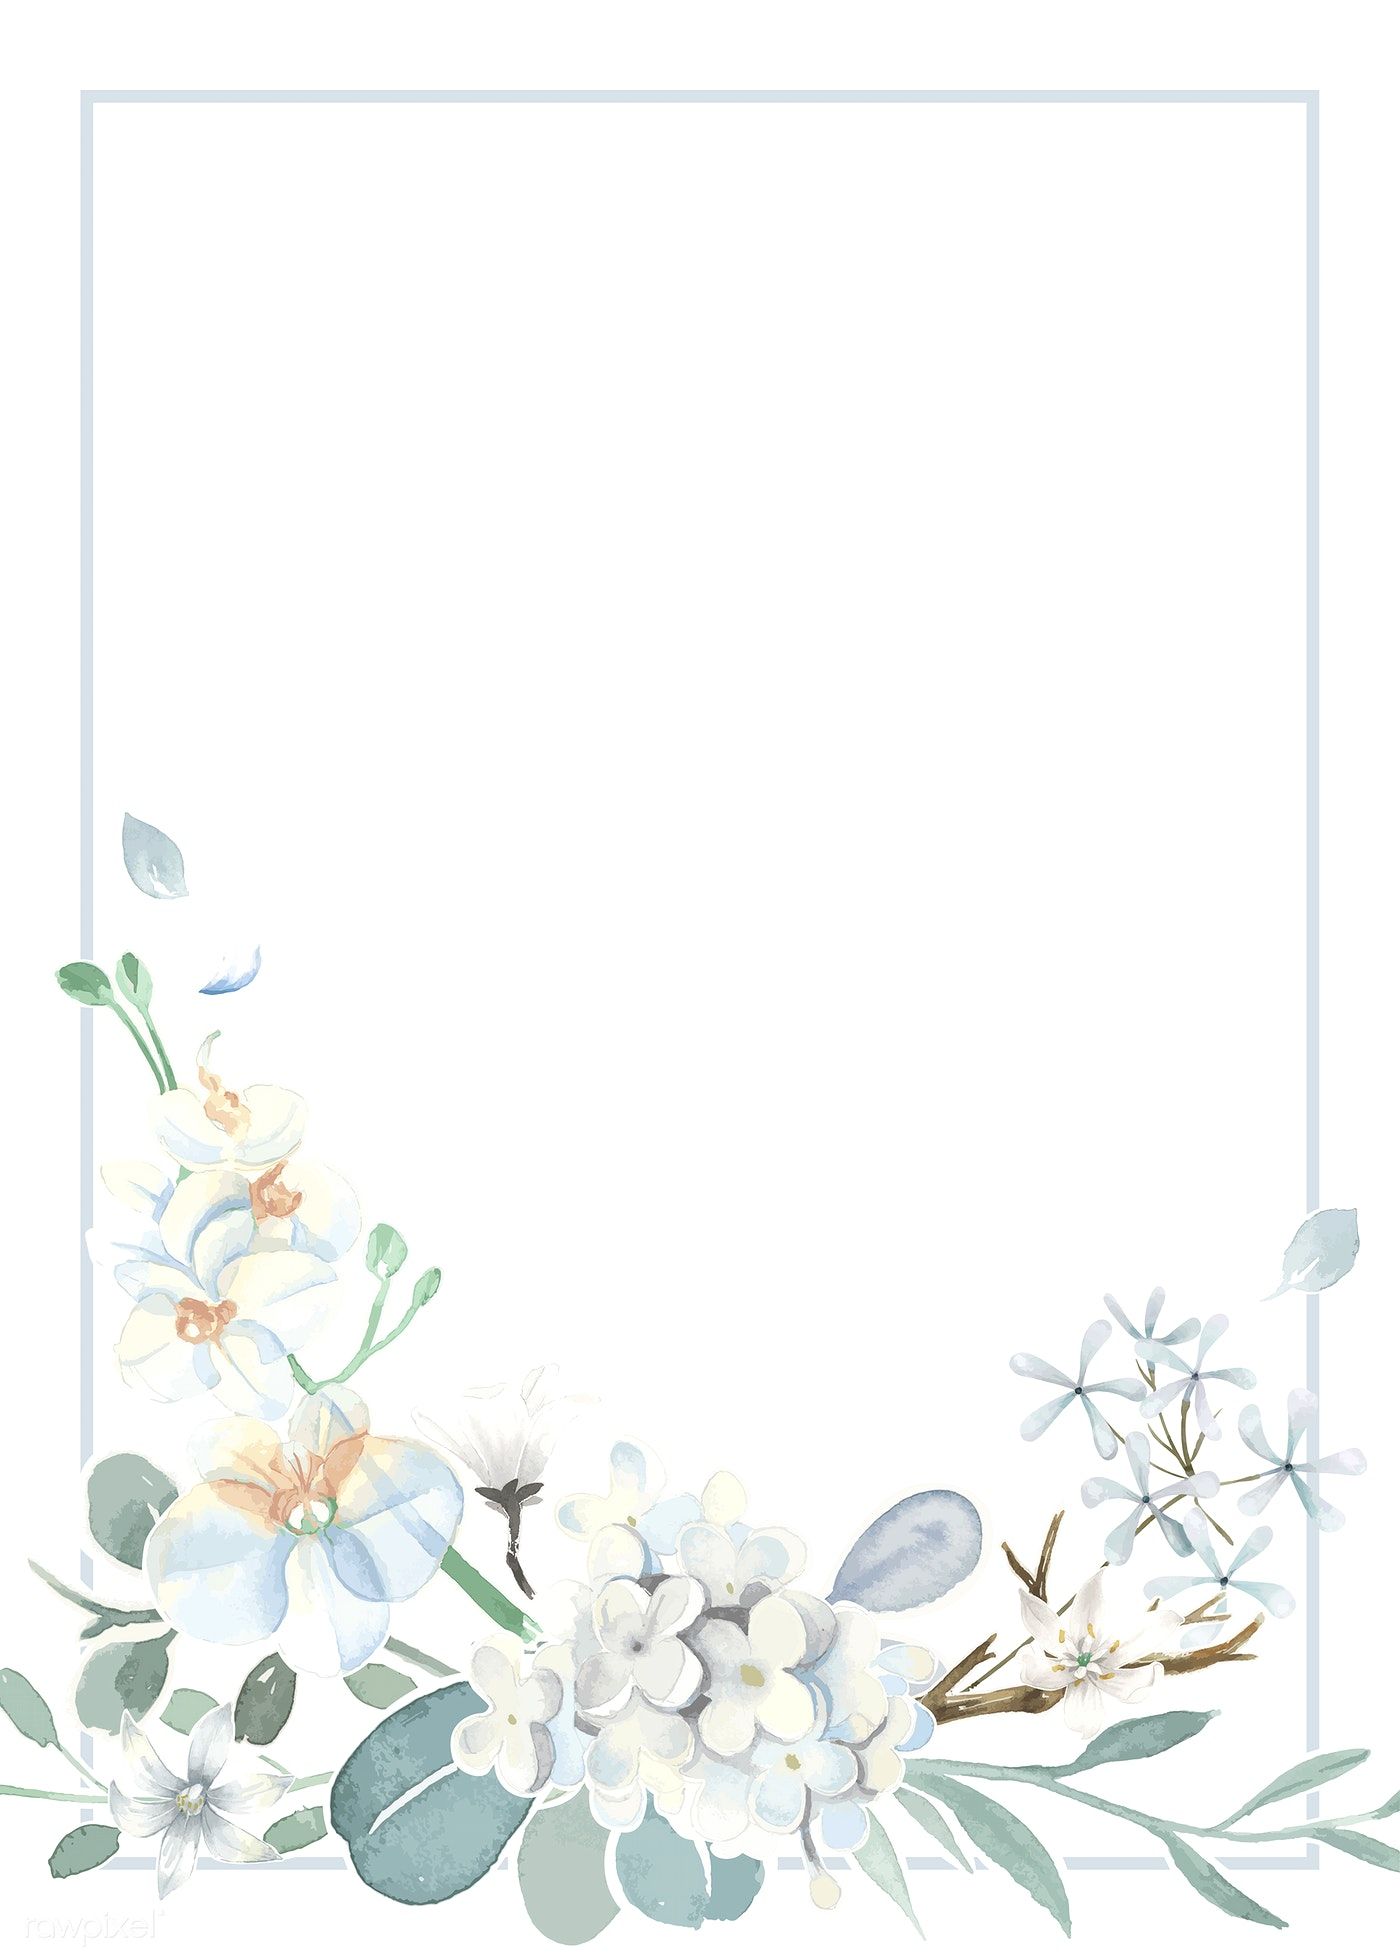 Greeting Card Background Design - HD Wallpaper 